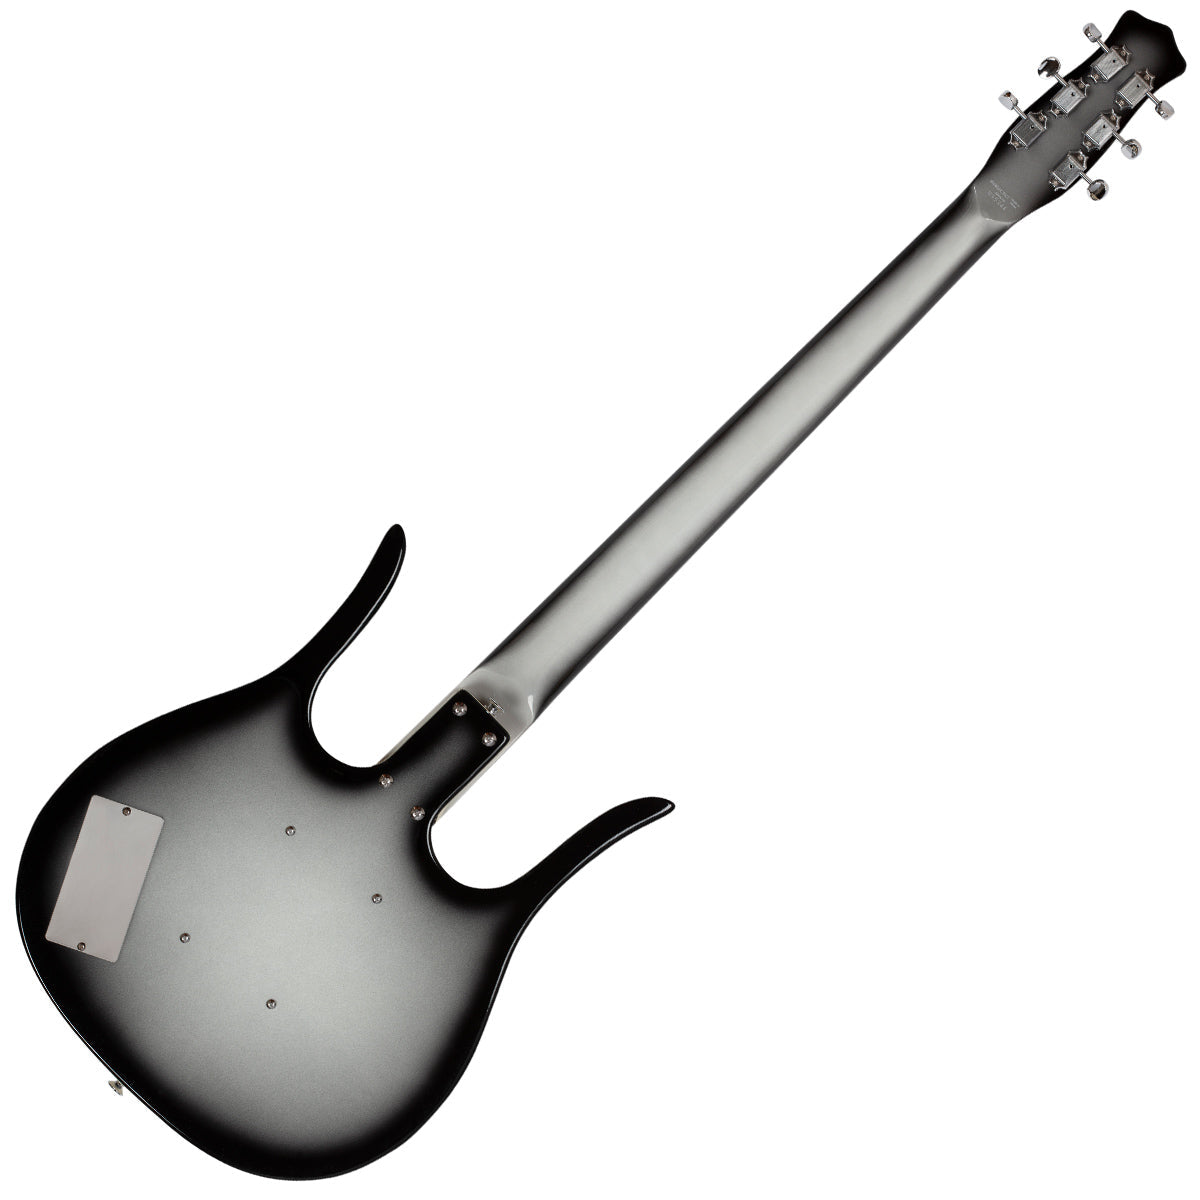 Danelectro Longhorn Baritone Electric Guitar ~ Blackburst, Electric Guitar for sale at Richards Guitars.